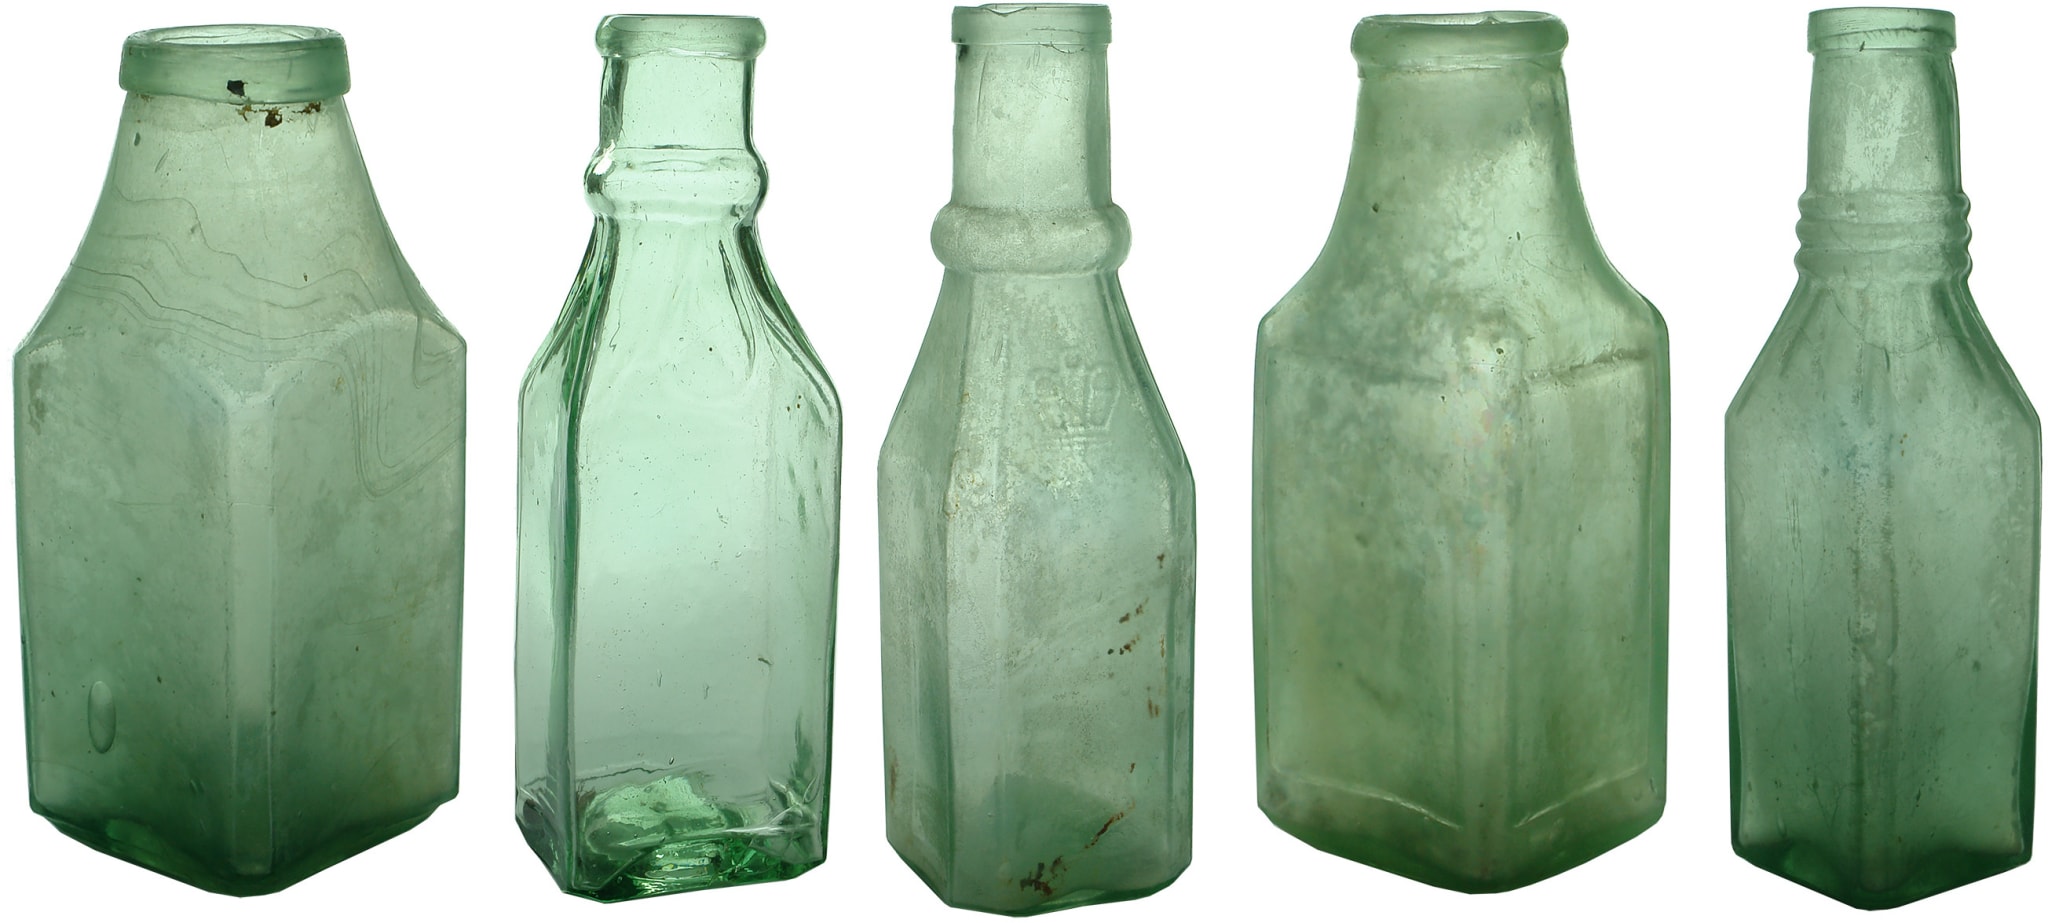 Antique Goldfields Era Pickle Bottles